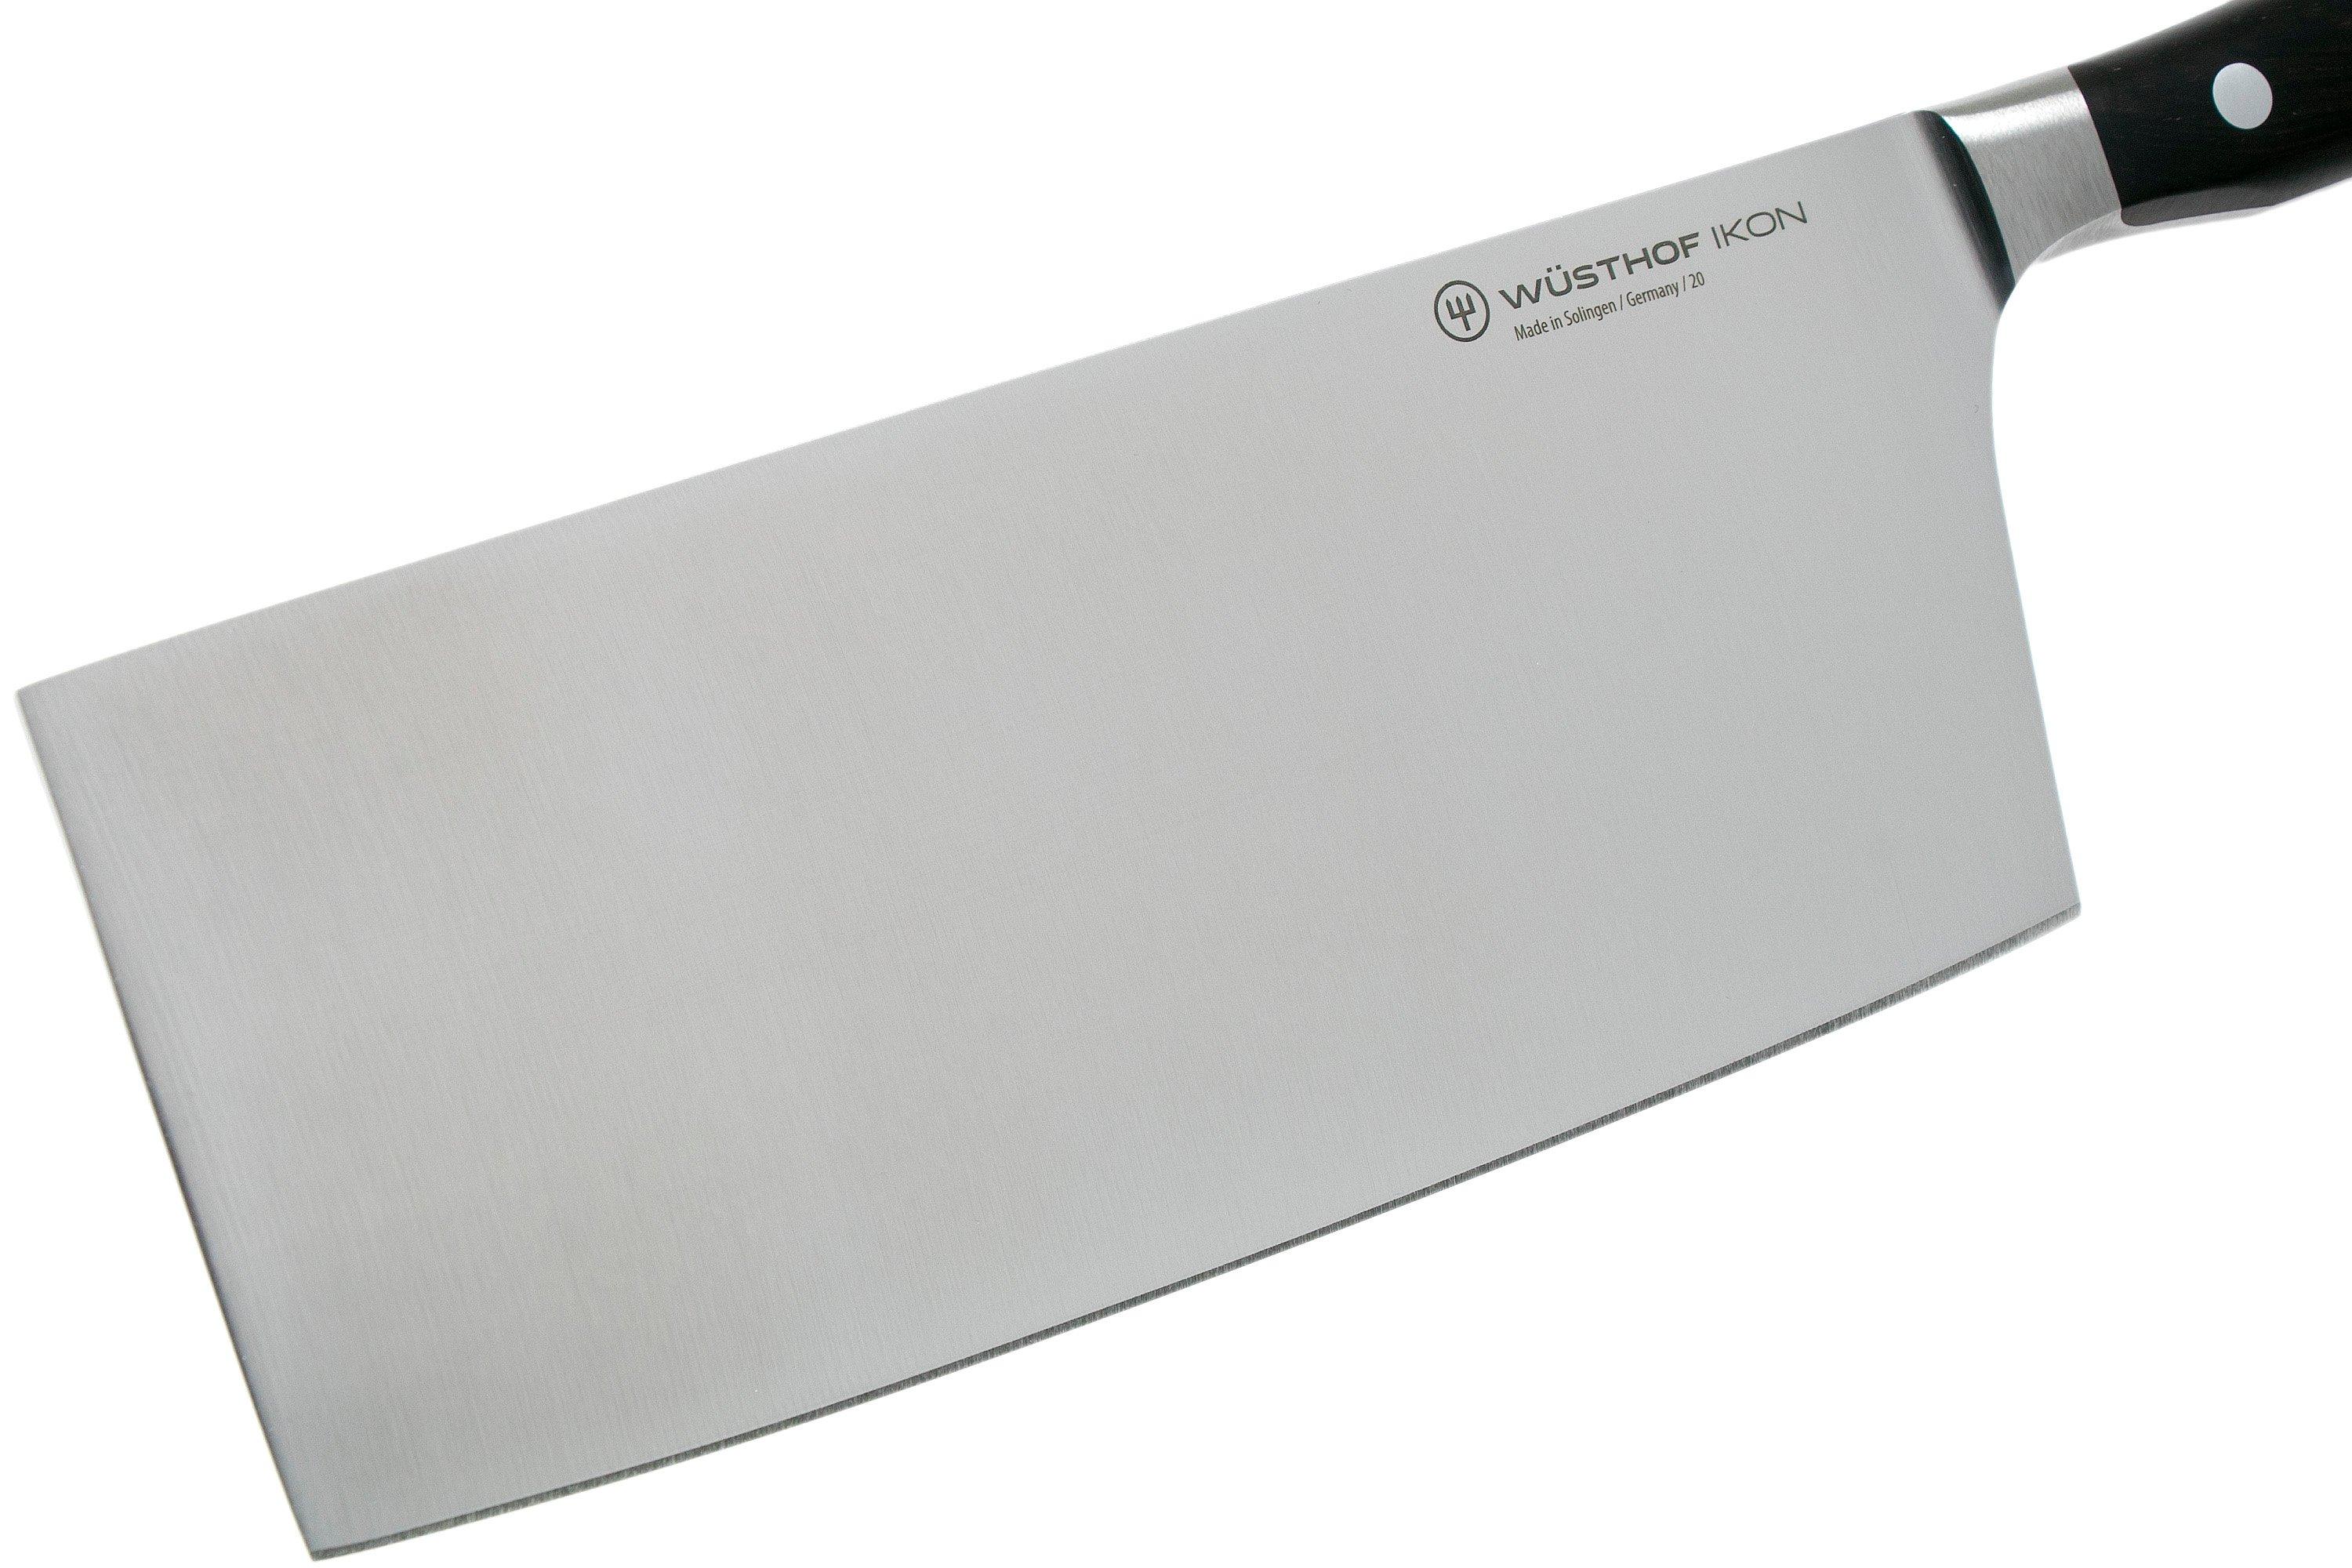 Chef's Choice CC2100 knife sharpening machine  Advantageously shopping at